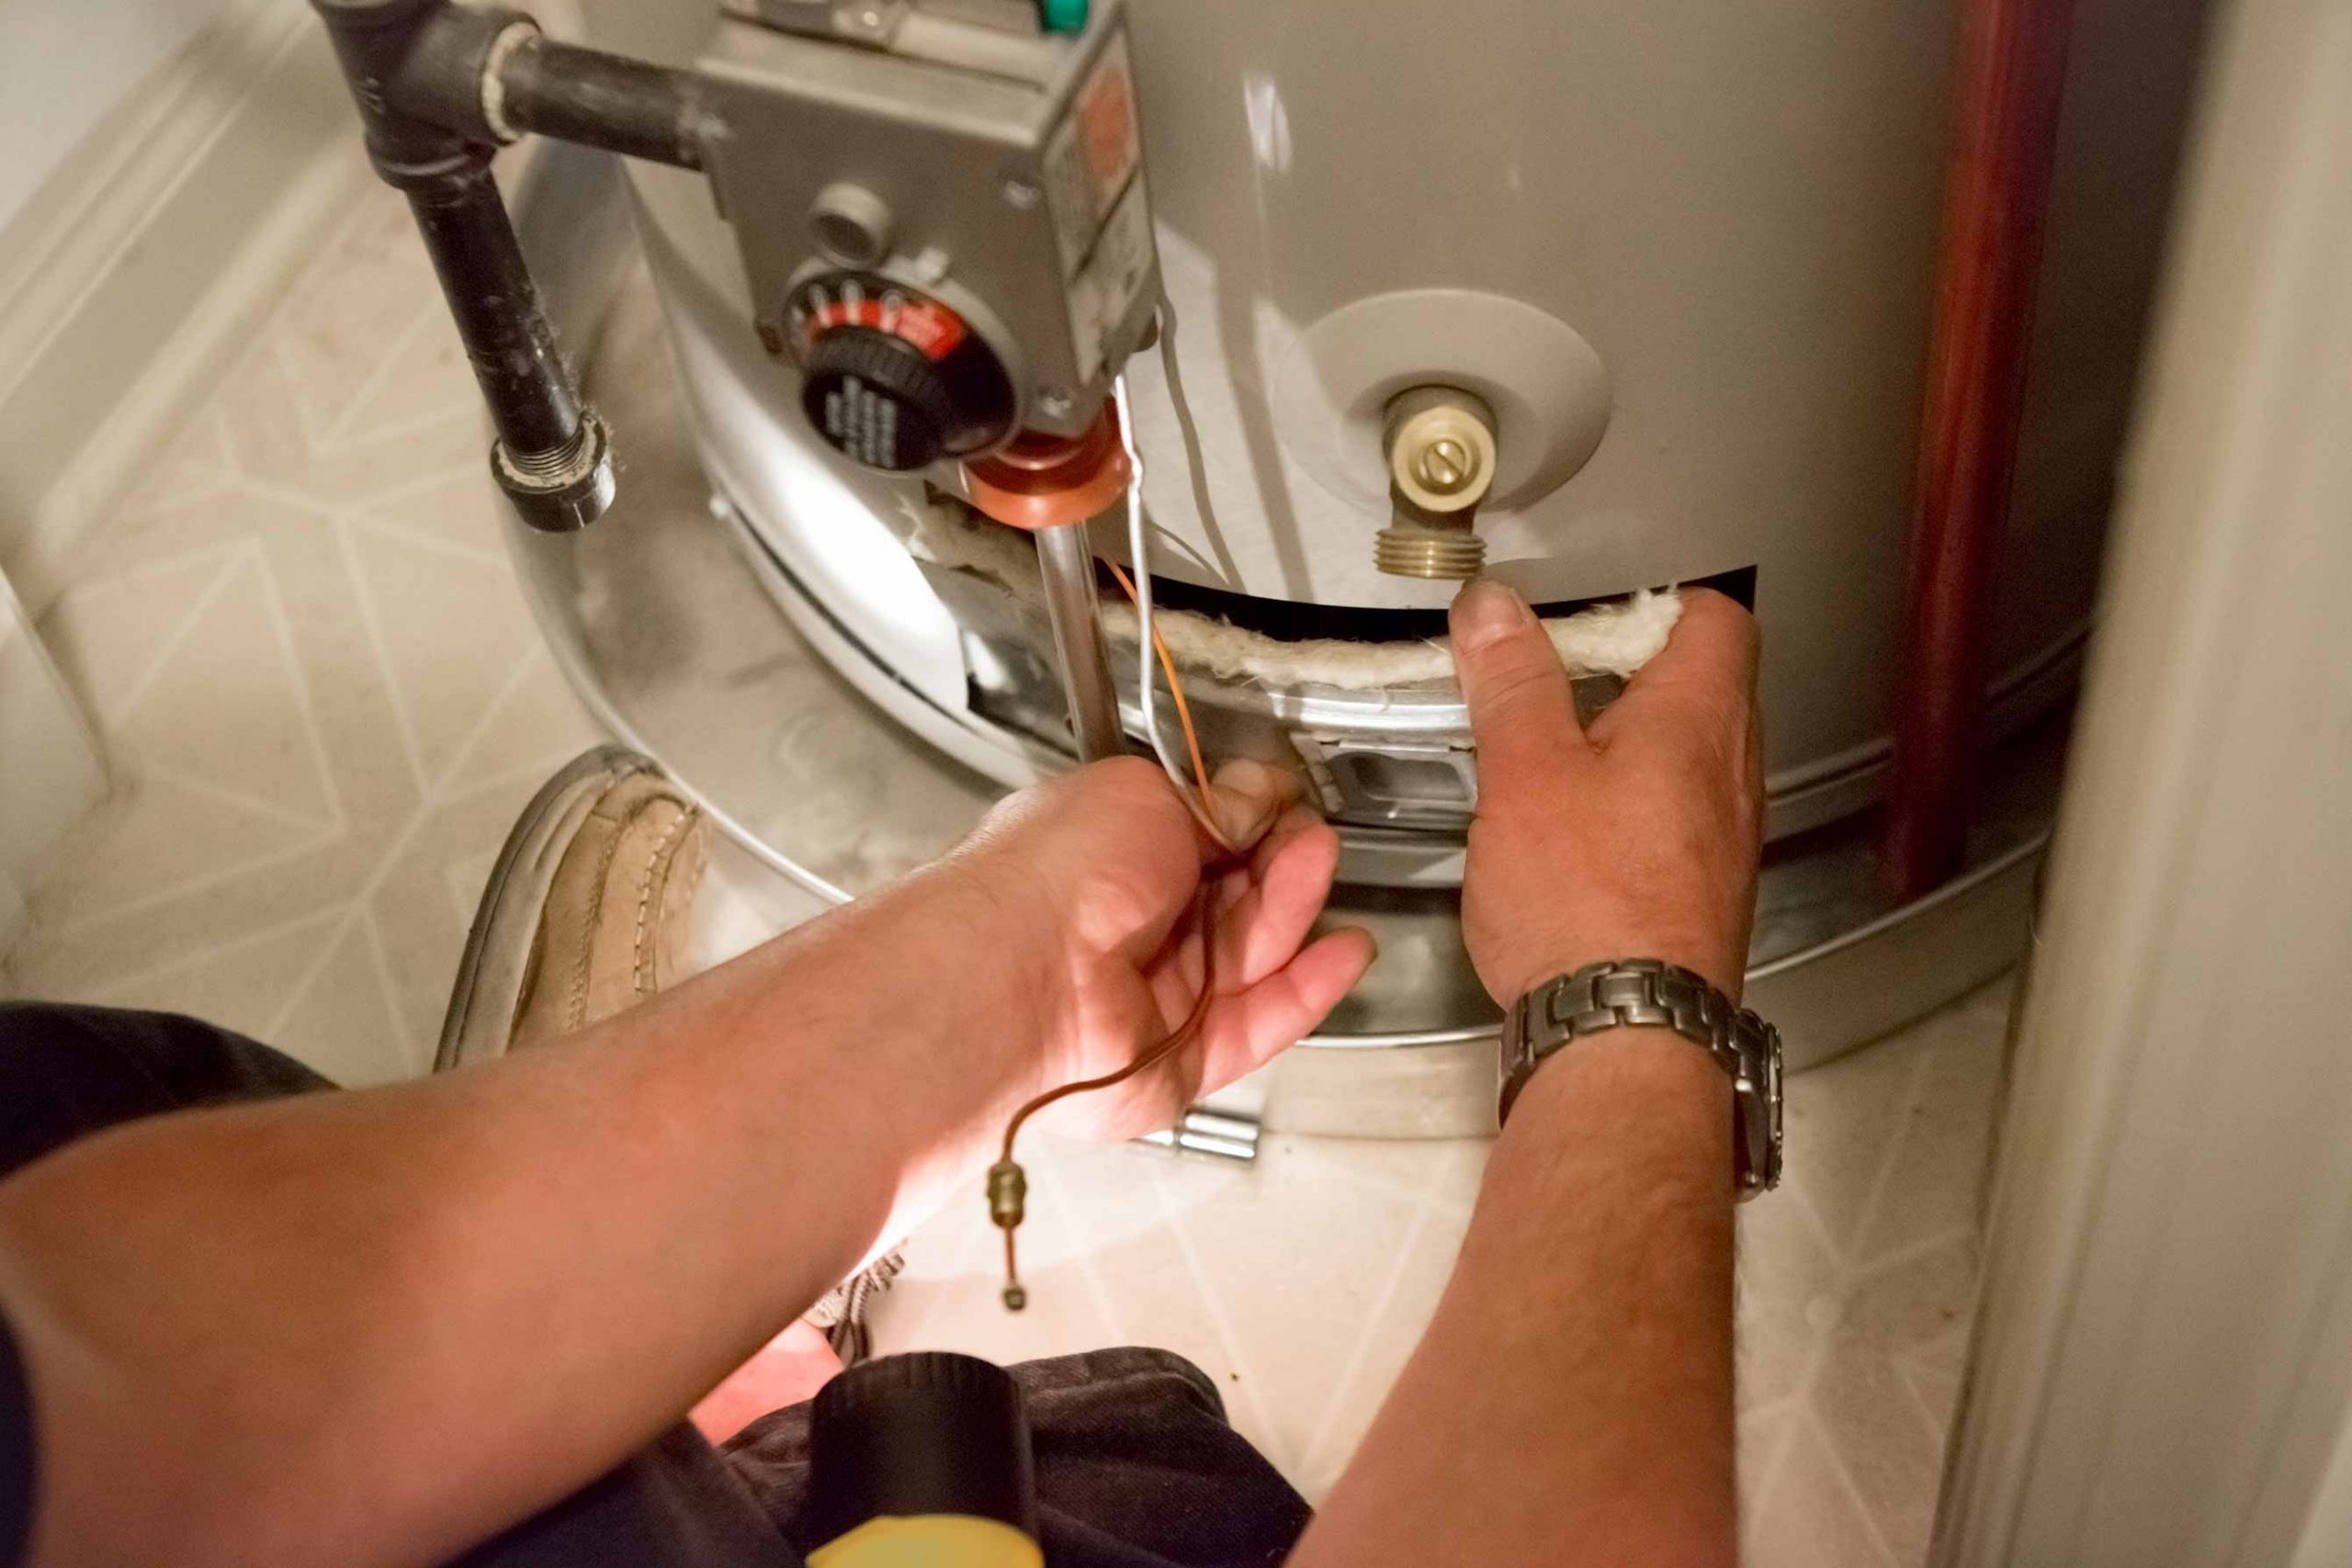 Hot water heater repair by Jed Mason Plumbing in Barnstaple